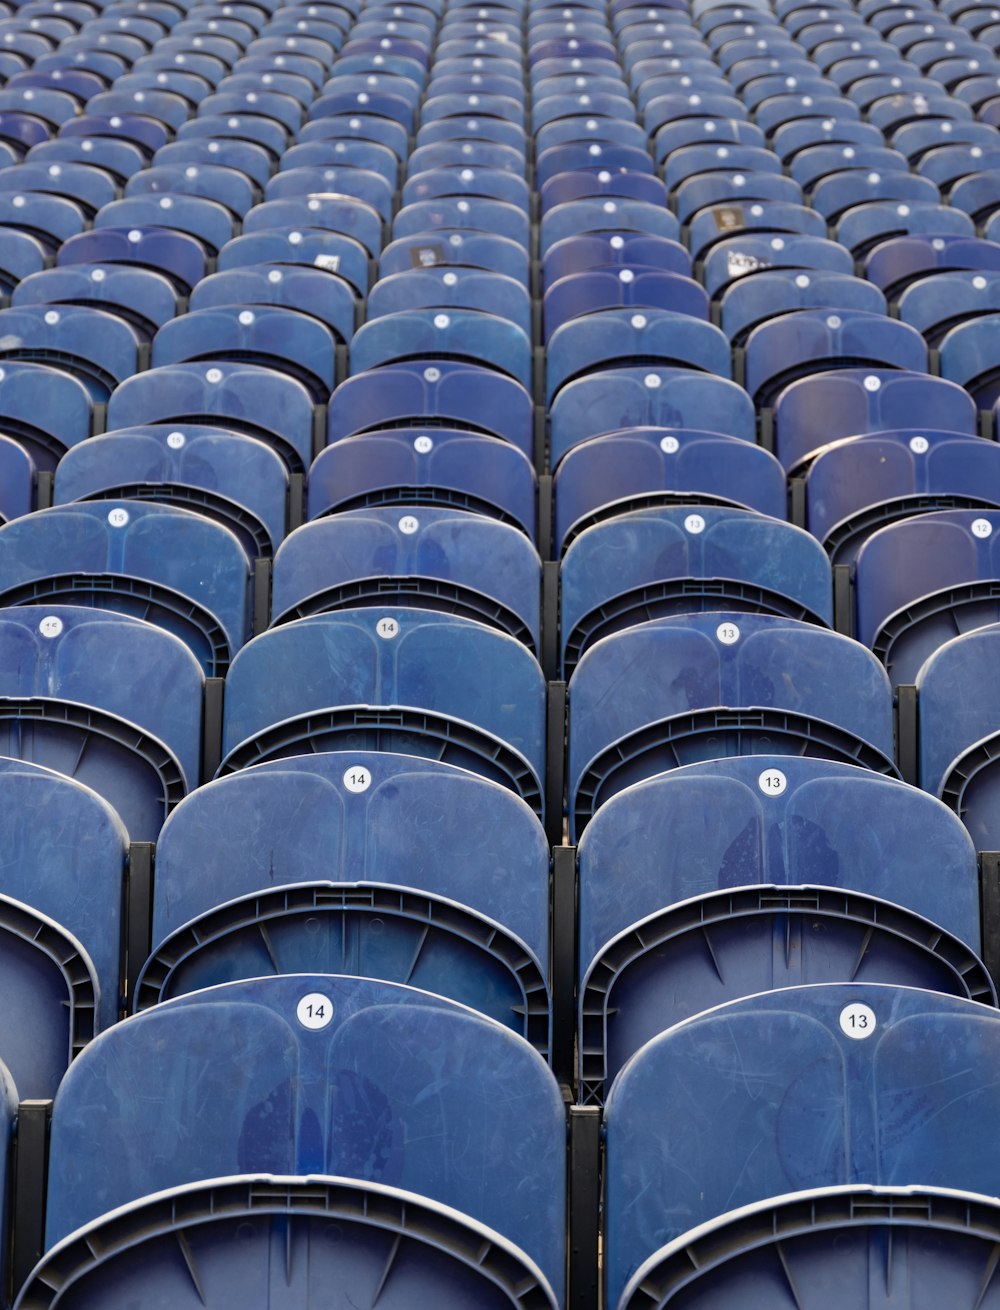 rows of empty blue stadium seats in a stadium